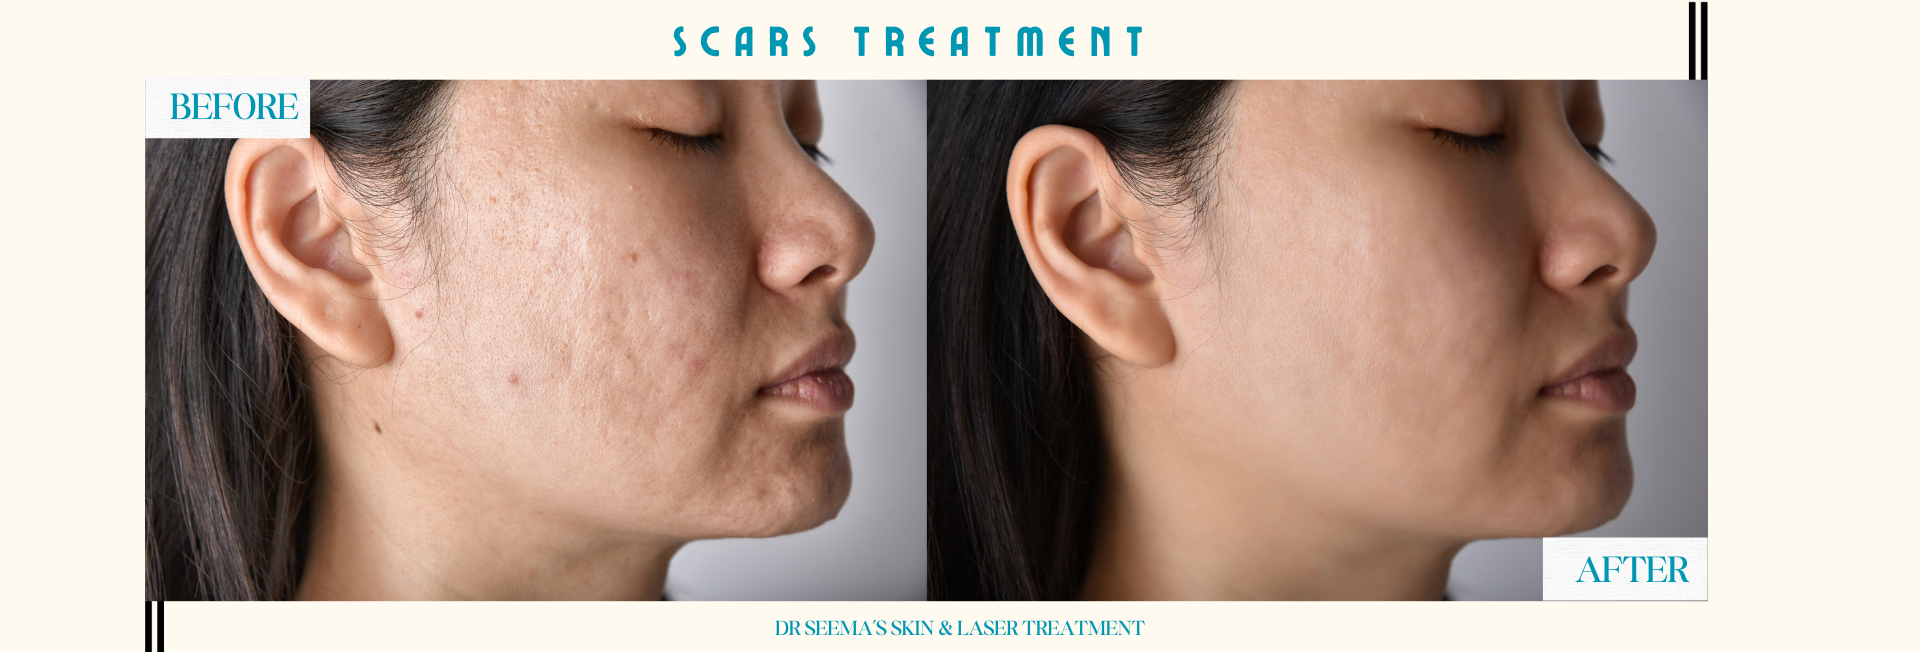 Scars_Treatment